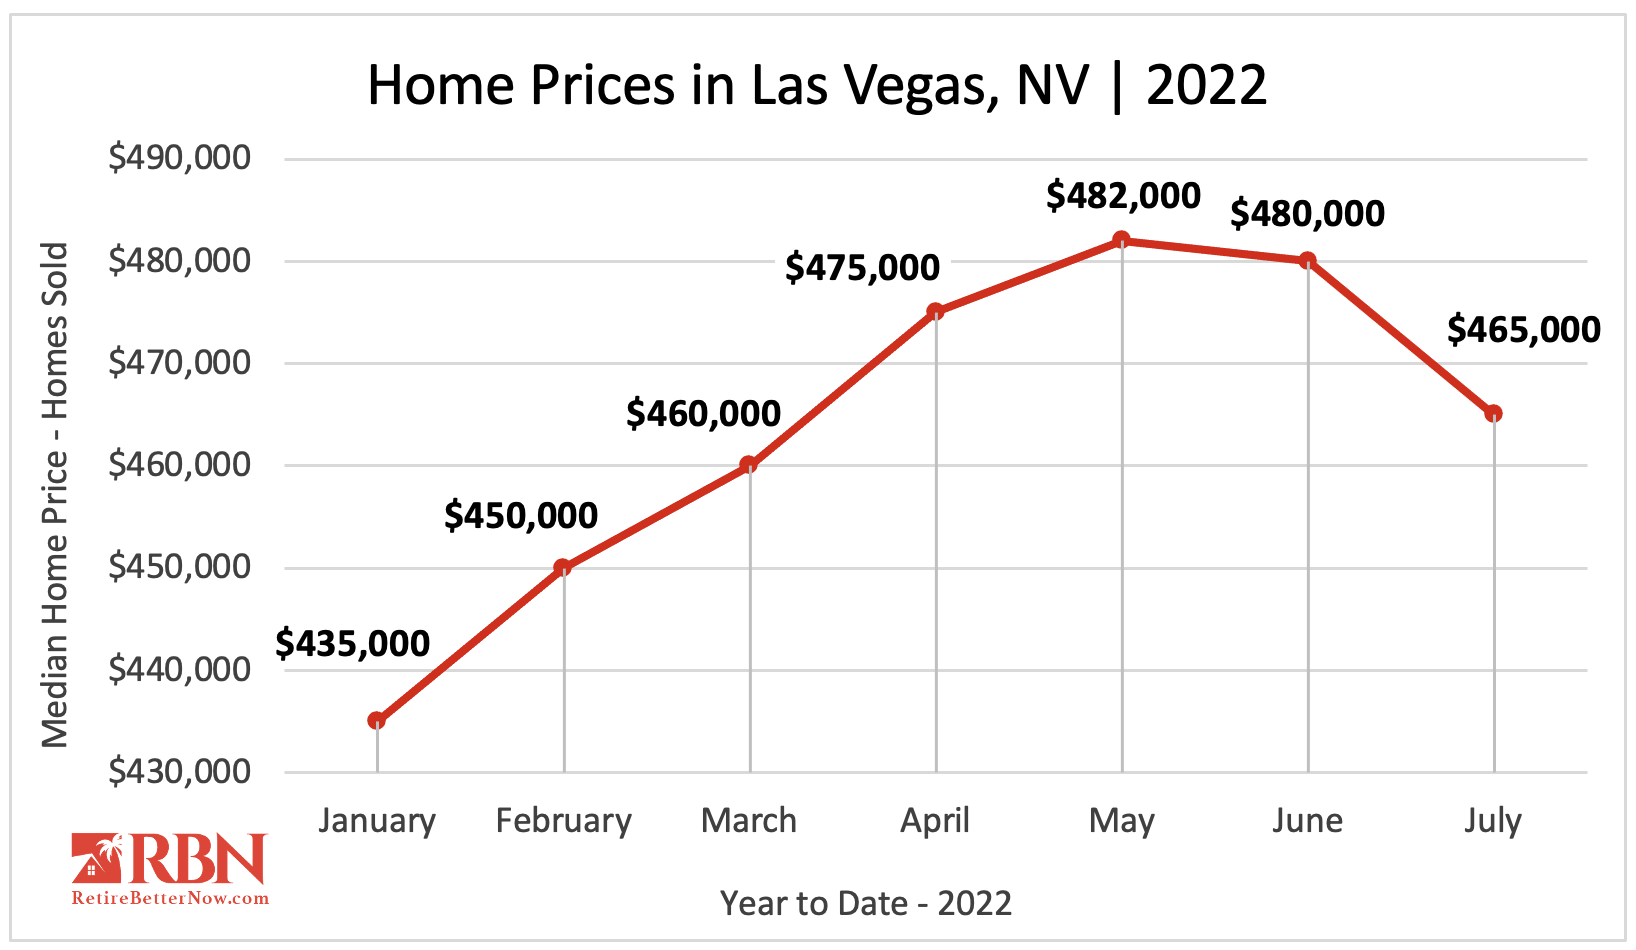 Median Home Prices in Las Vegas, NV - July 2022 Update